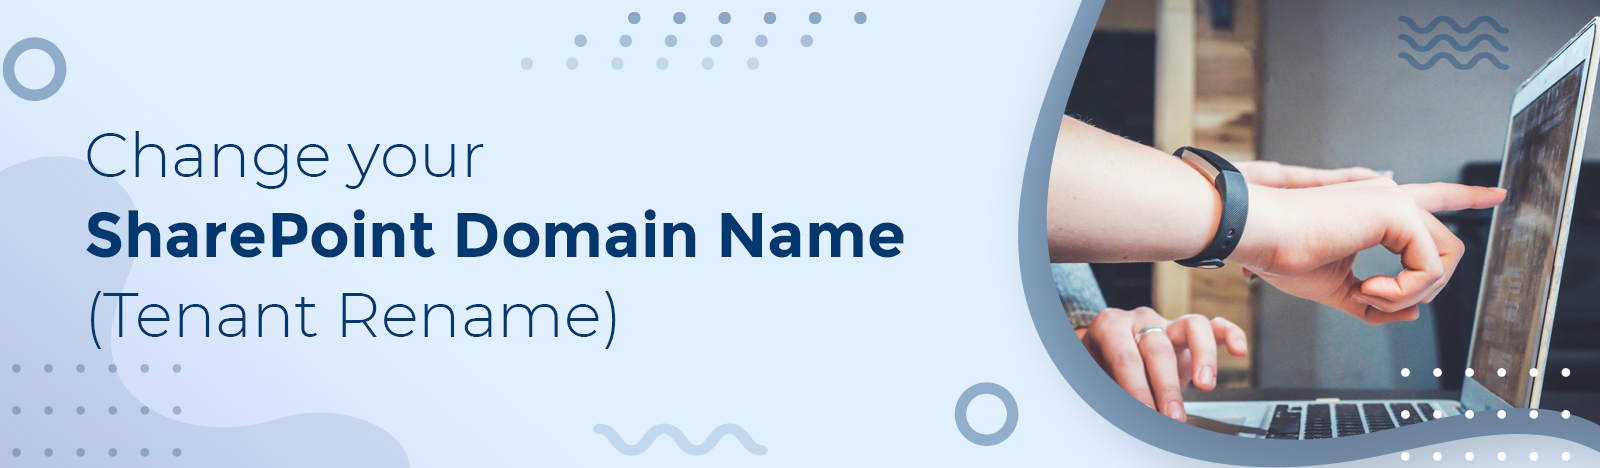 Change SharePoint Domain Name